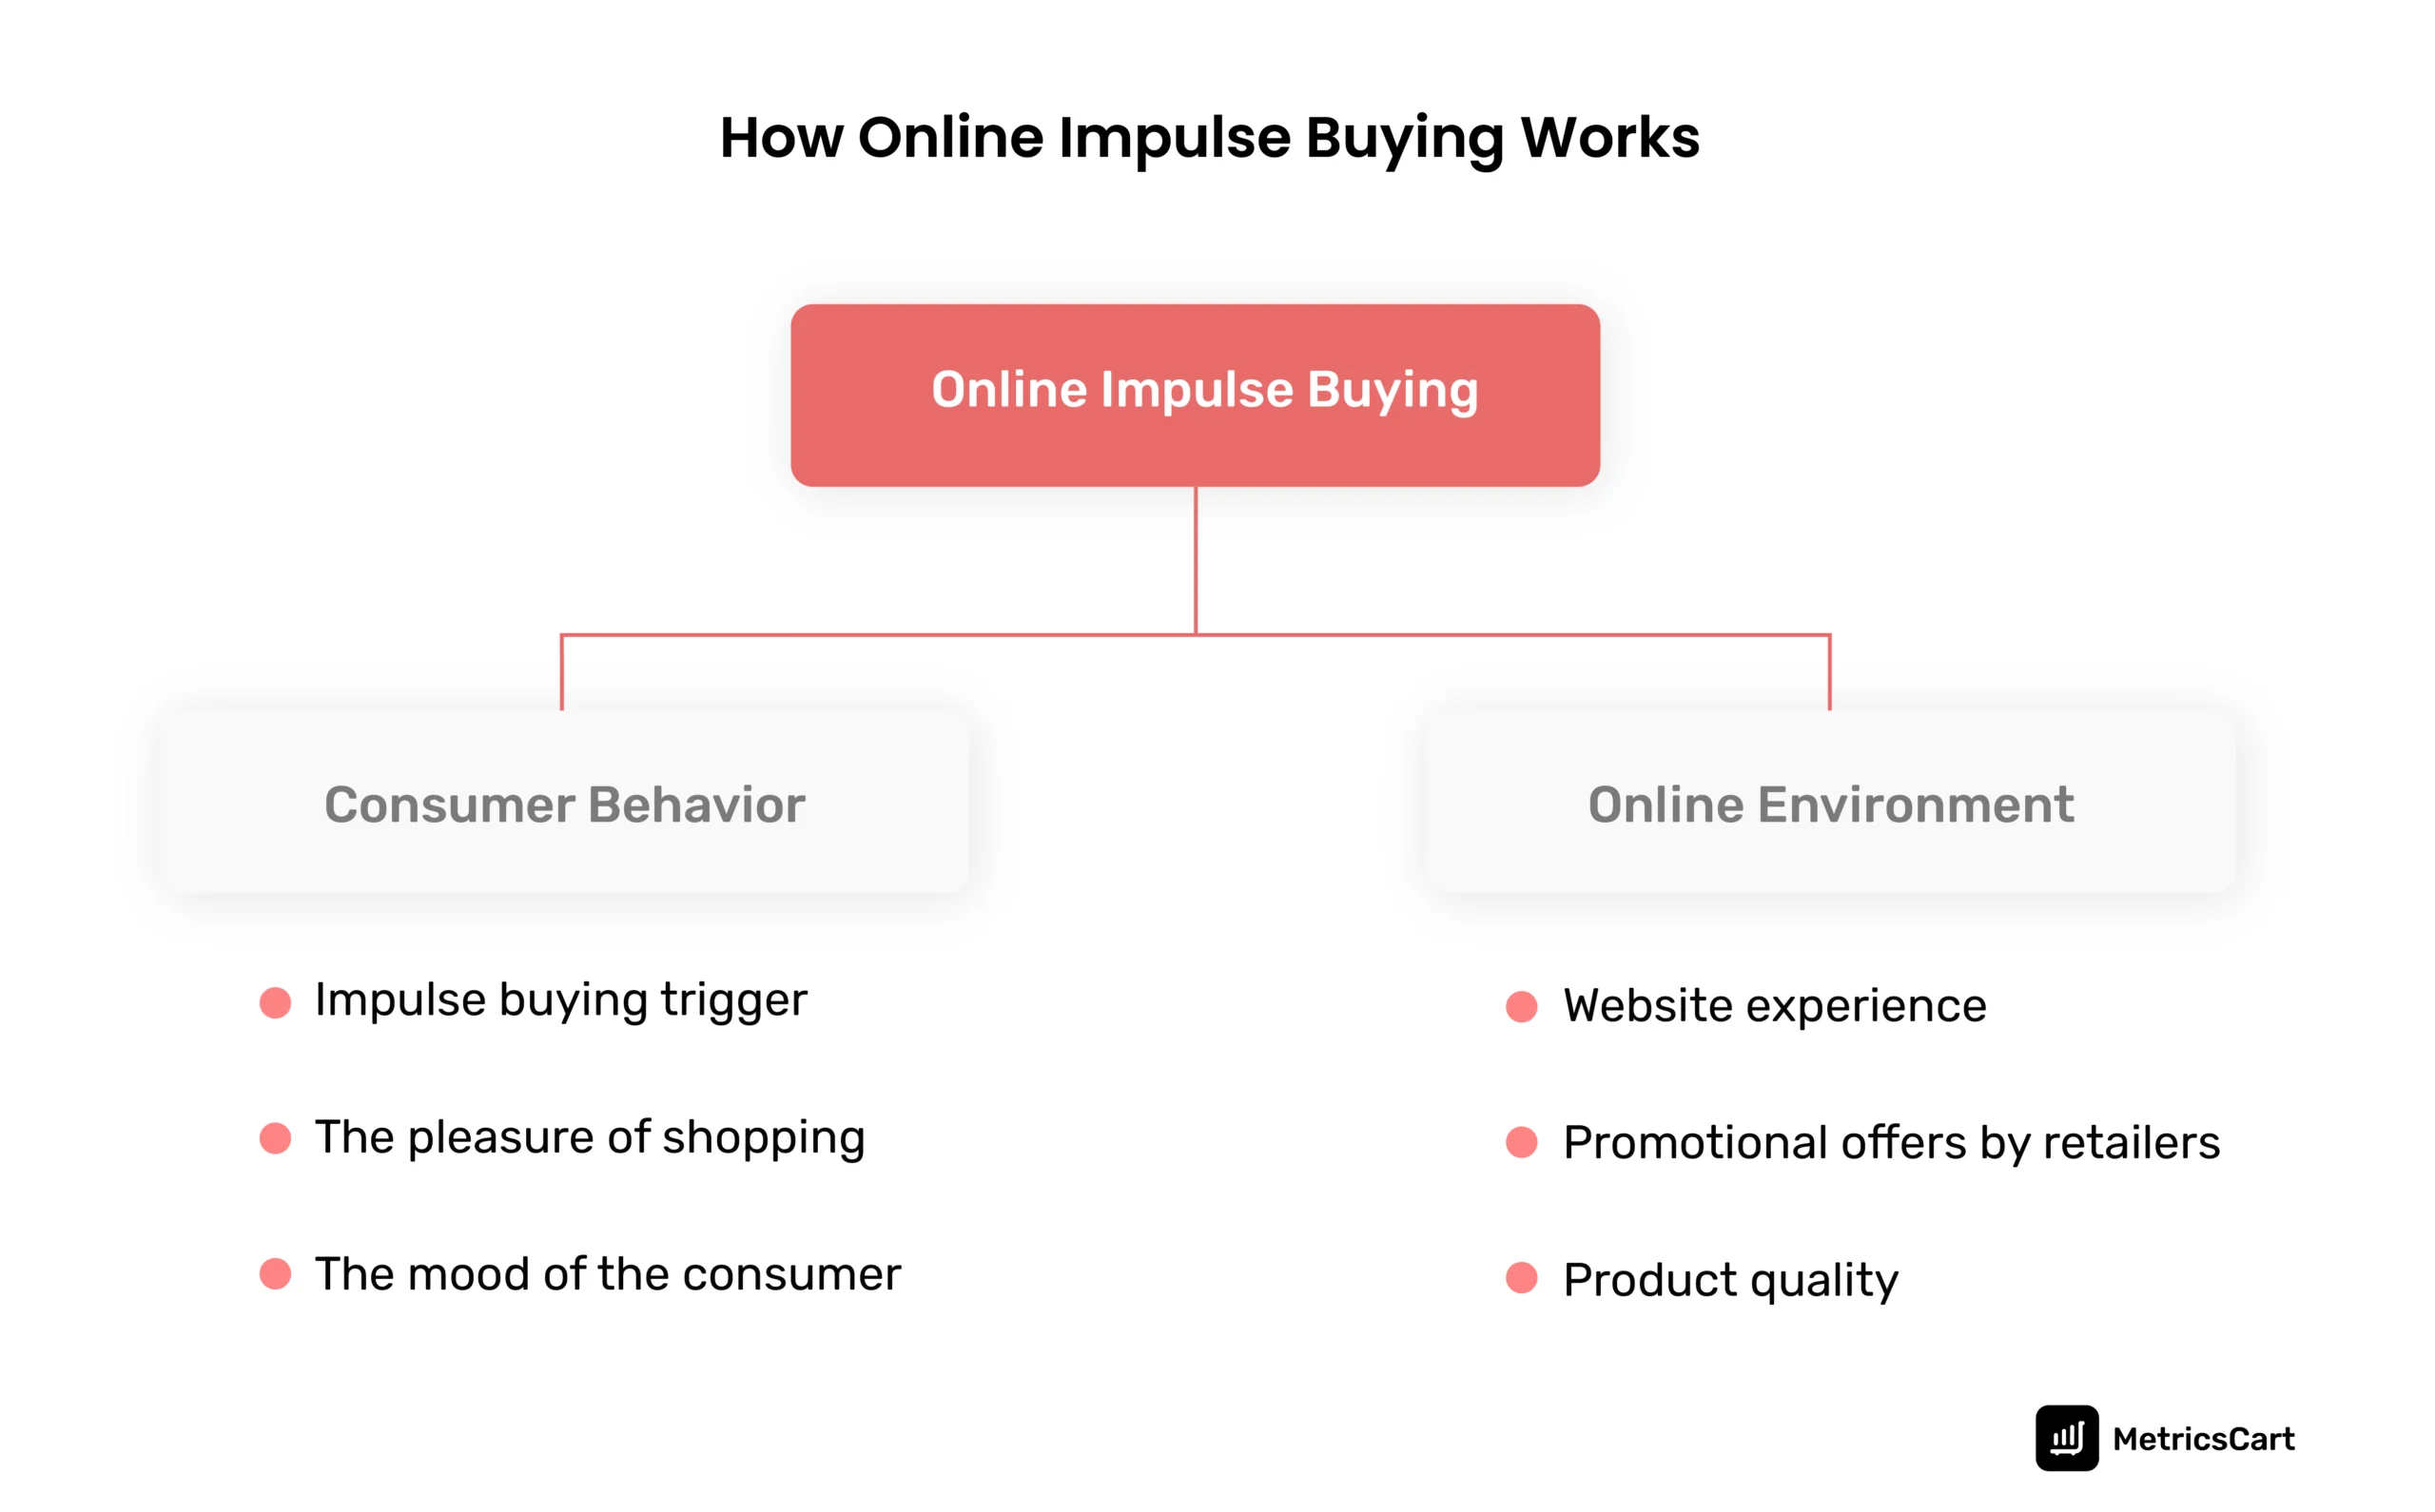 A descriptive chart explaining how online impulse buying works.